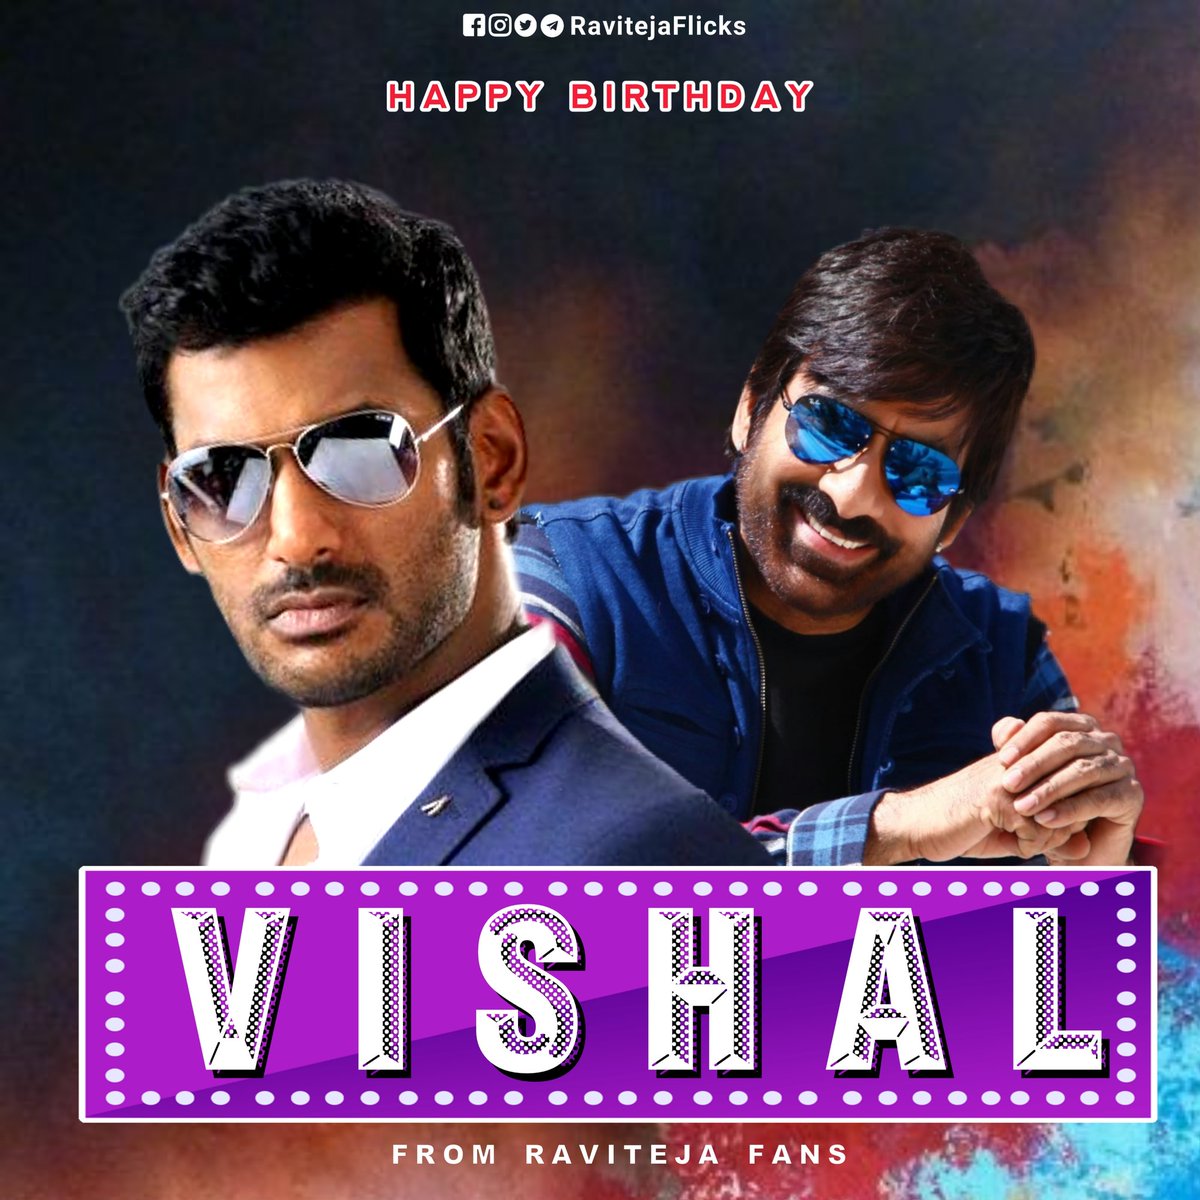 Here is design from #RaviTeja @RaviTeja_offl  fans  

Birthday Whises for @VishalKOfficial in advance ❤️

#HBDVishal
#HappyBirthdayVishal 
#VishalBdayCDP #vishal #RaviTejaFlicks